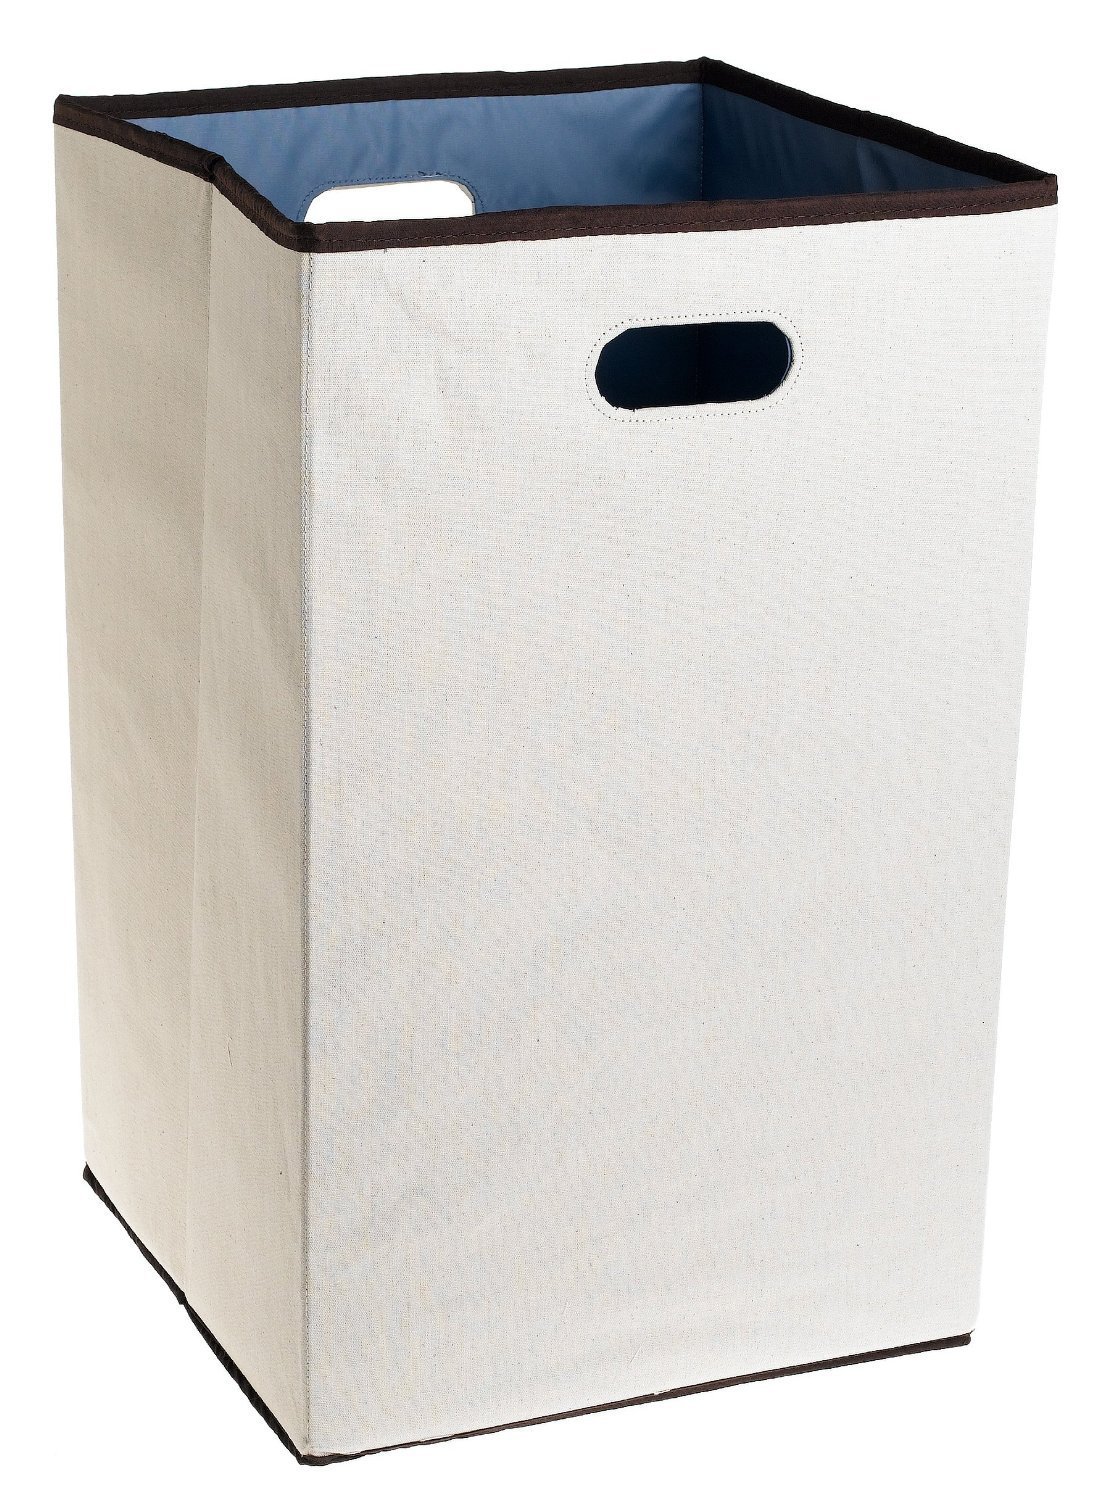 Rubbermaid Configurations Custom Closet Folding Laundry Hamper – Just $11.29!